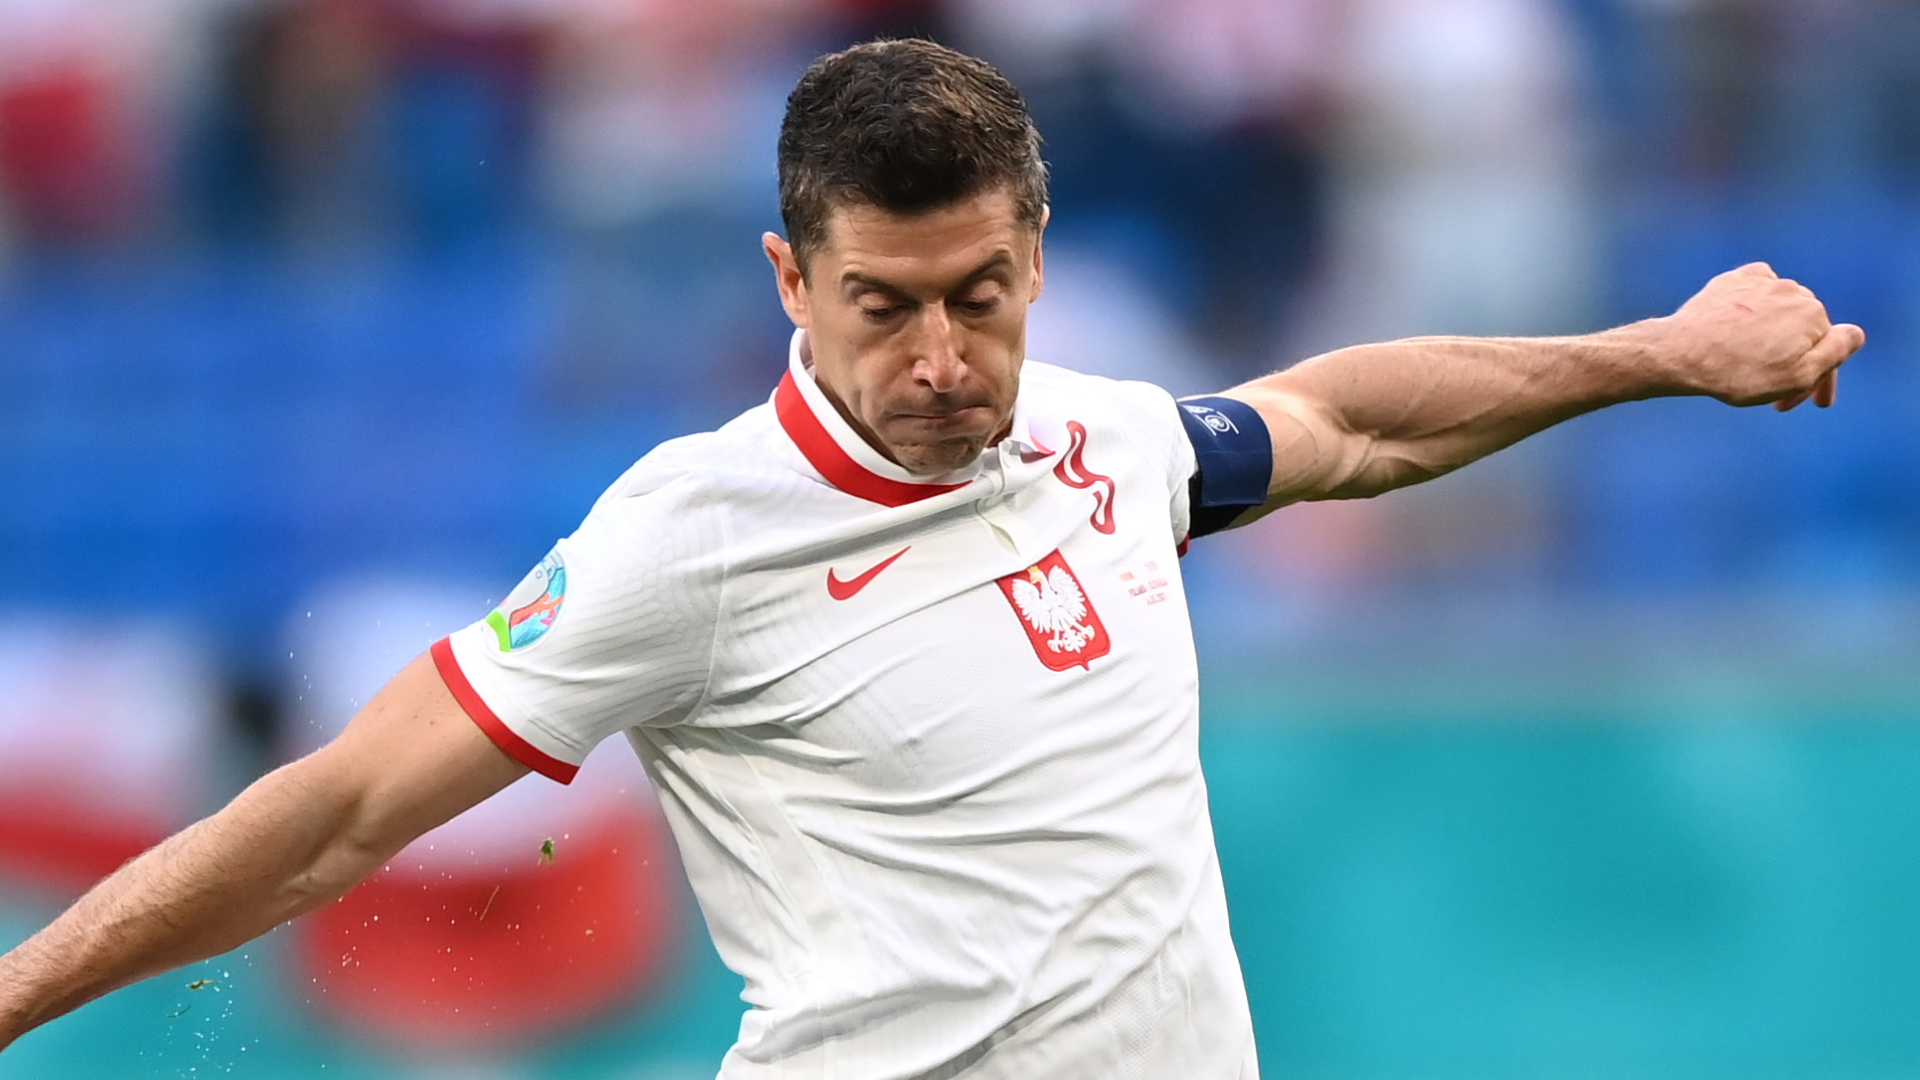 Euro 2020: Poland 1-2 Slovakia full match reaction & quotes: Slovakia boss thrilled after his side 'neutralized' Lewandowski